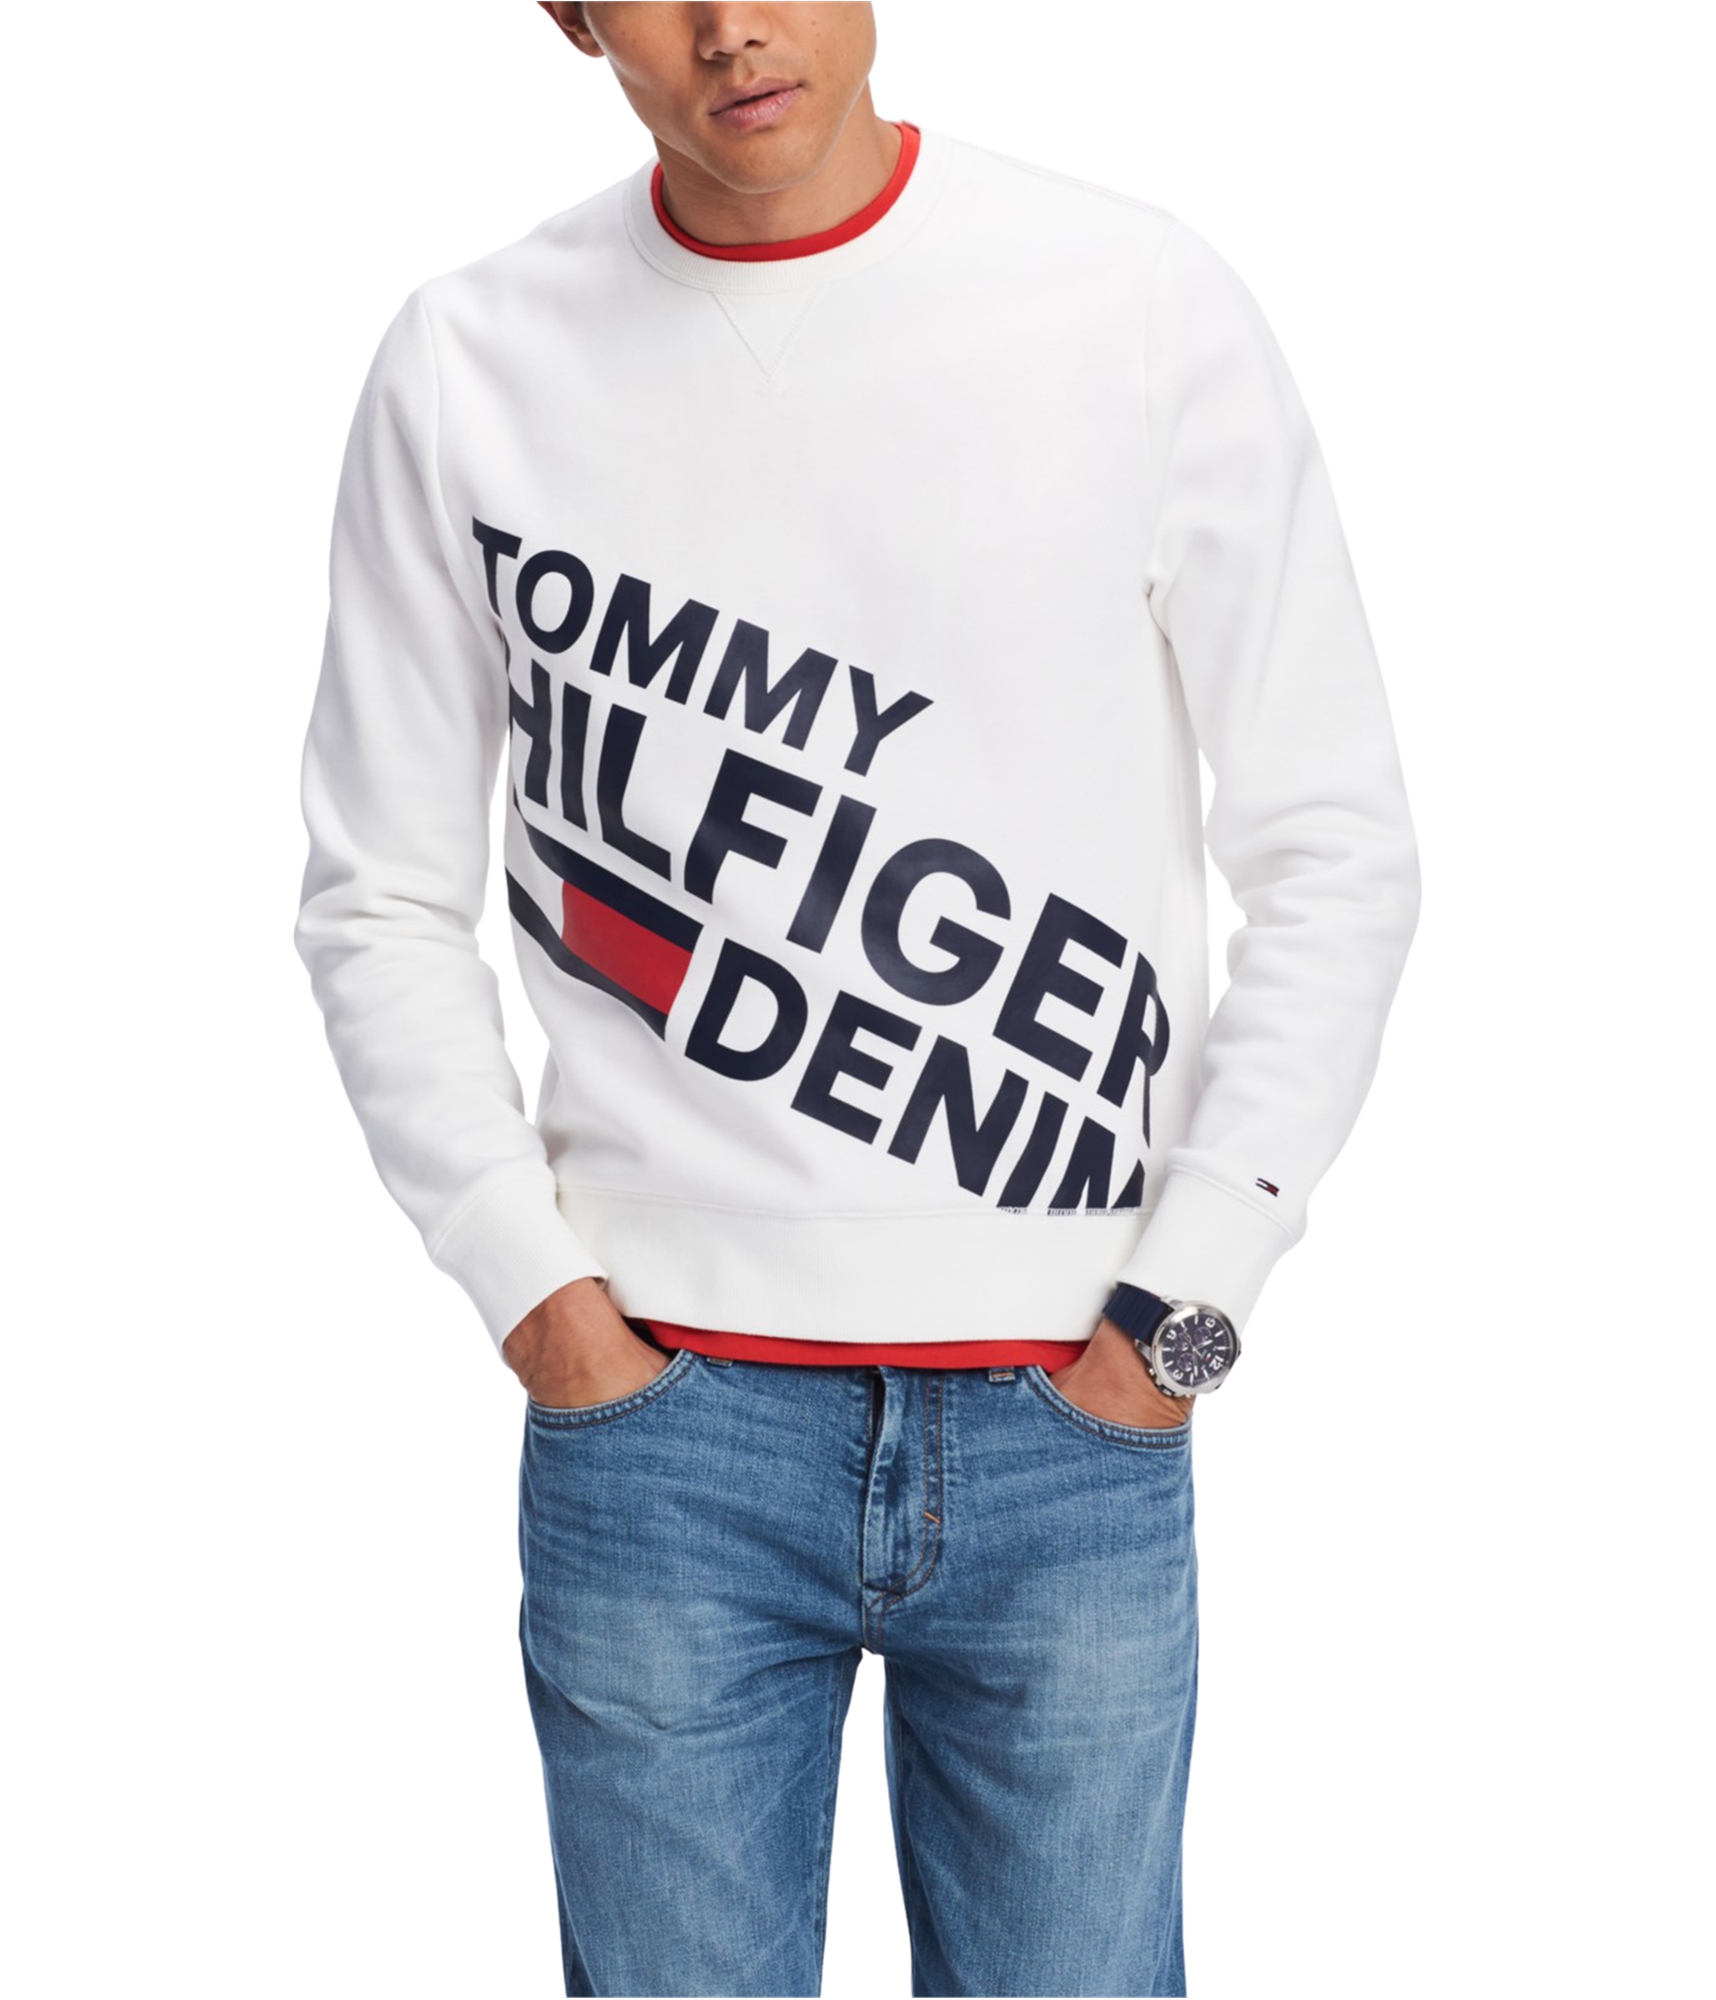 Tommy Hilfiger Mens Tommy Hilfiger Denim Sweatshirt, White, XX-Large | eBay